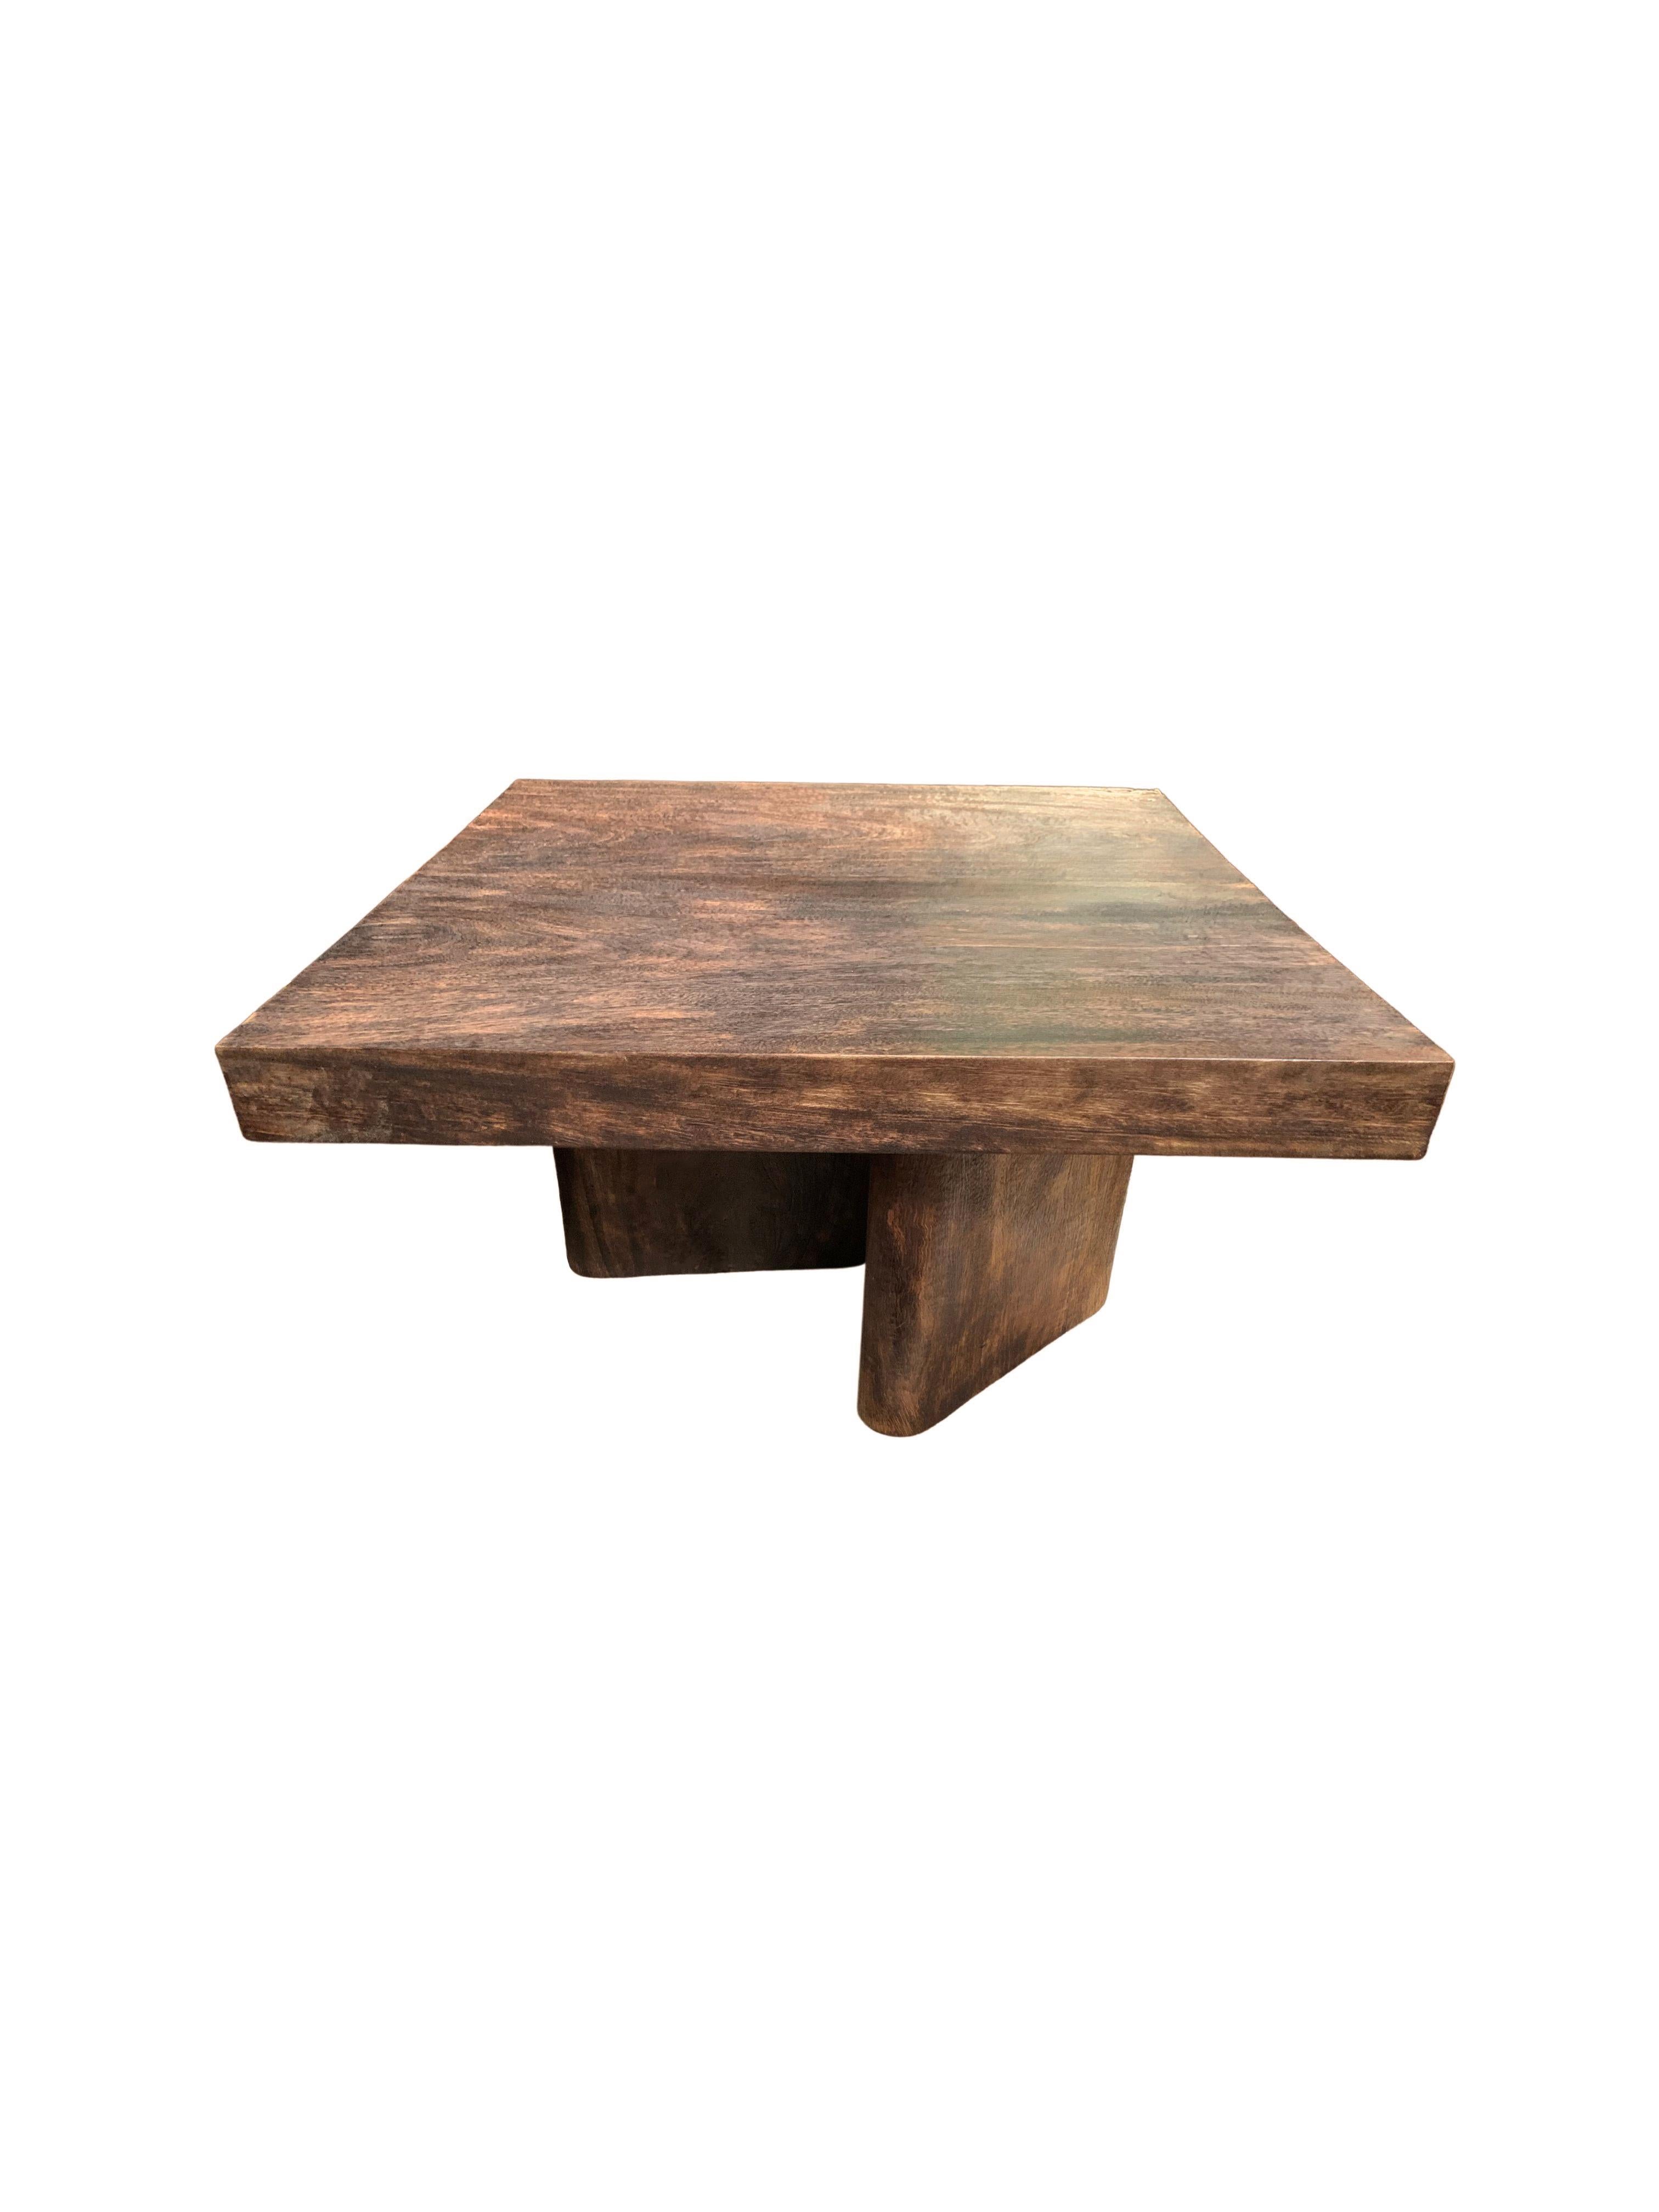 Indonesian Sculptural Mango Wood Table Espresso Finish Modern Organic For Sale